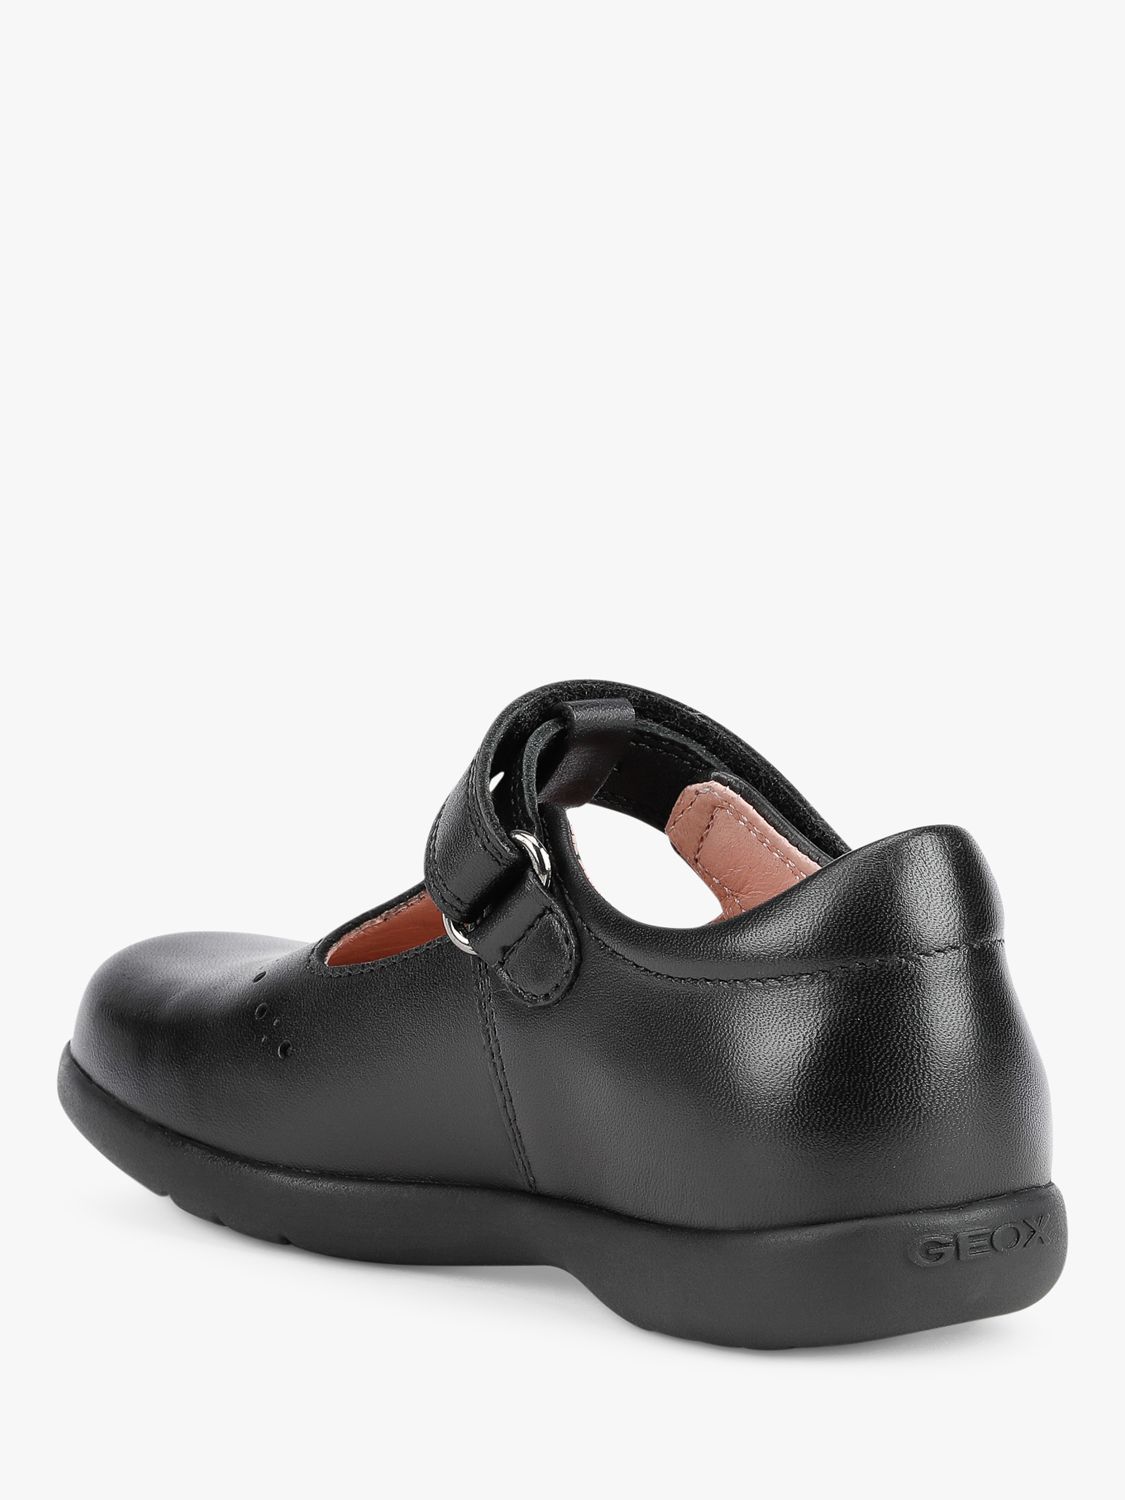 Geox Kids' Naimara Leather School Shoes, Black, 30